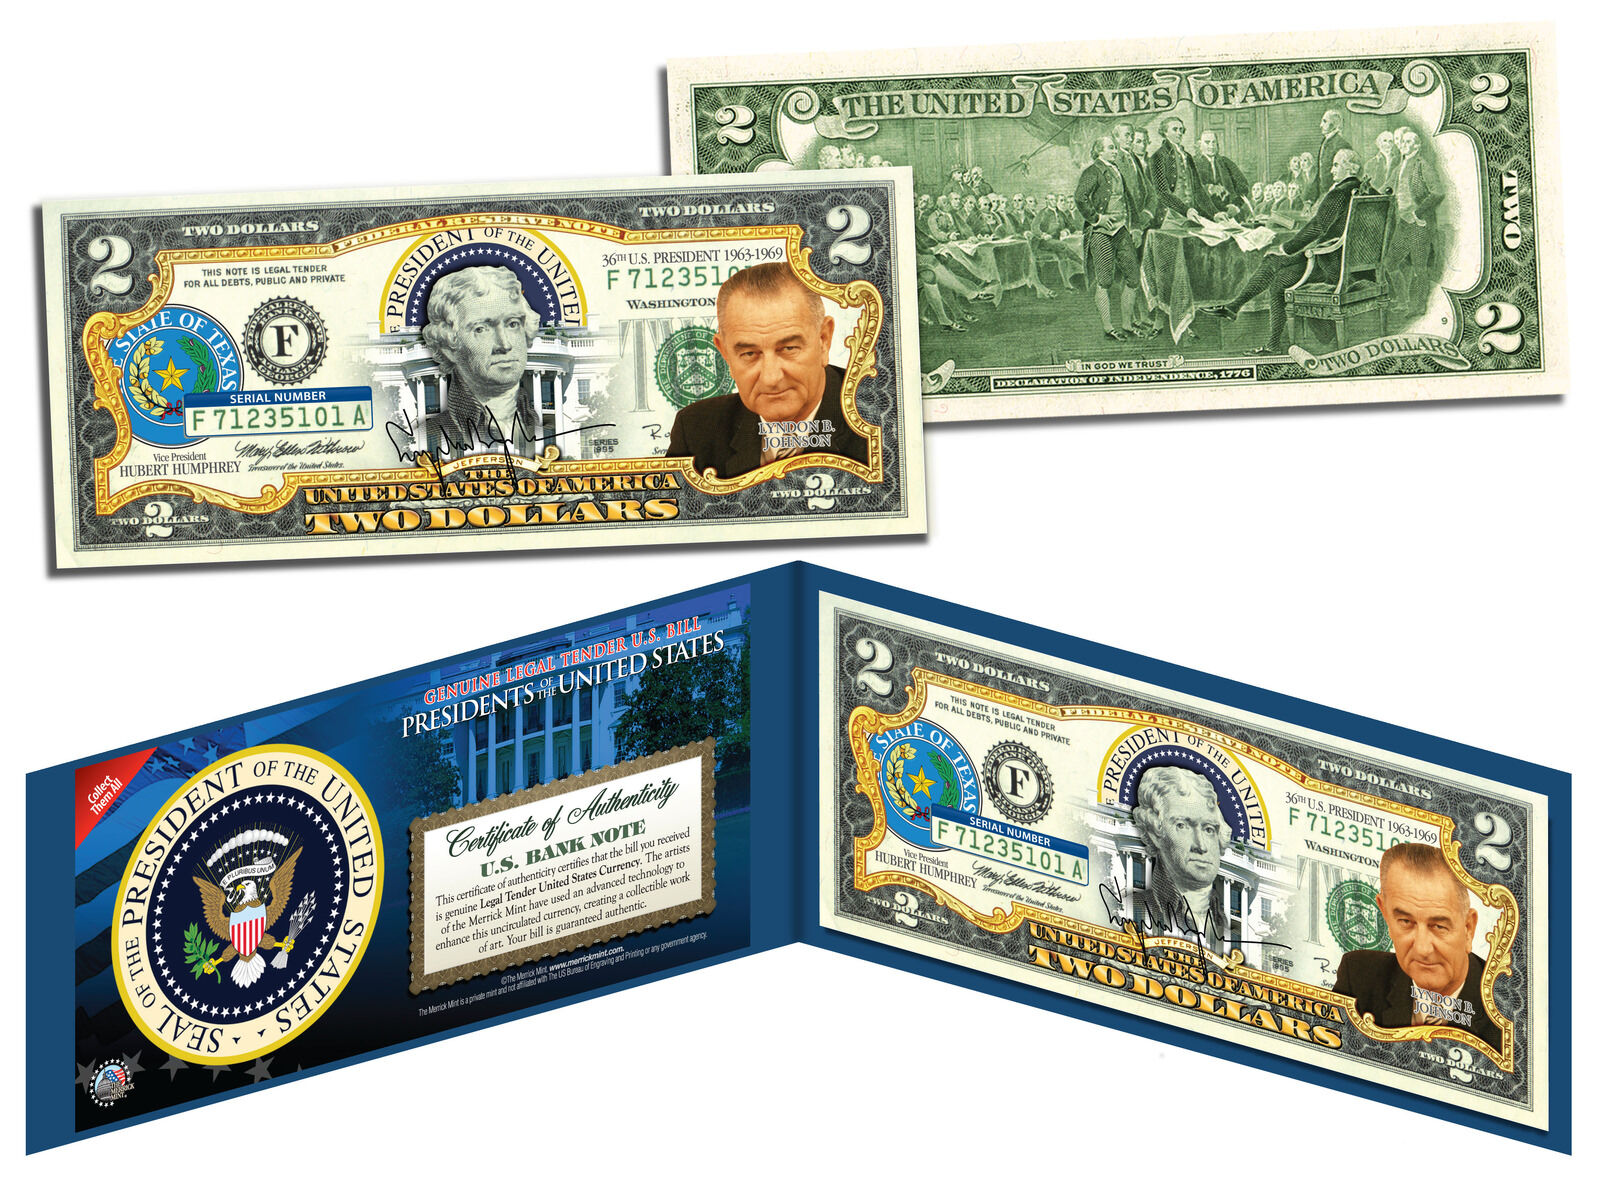 LYNDON B JOHNSON * 36th U.S. President * Colorized $2 Bill Genuine Legal Tender